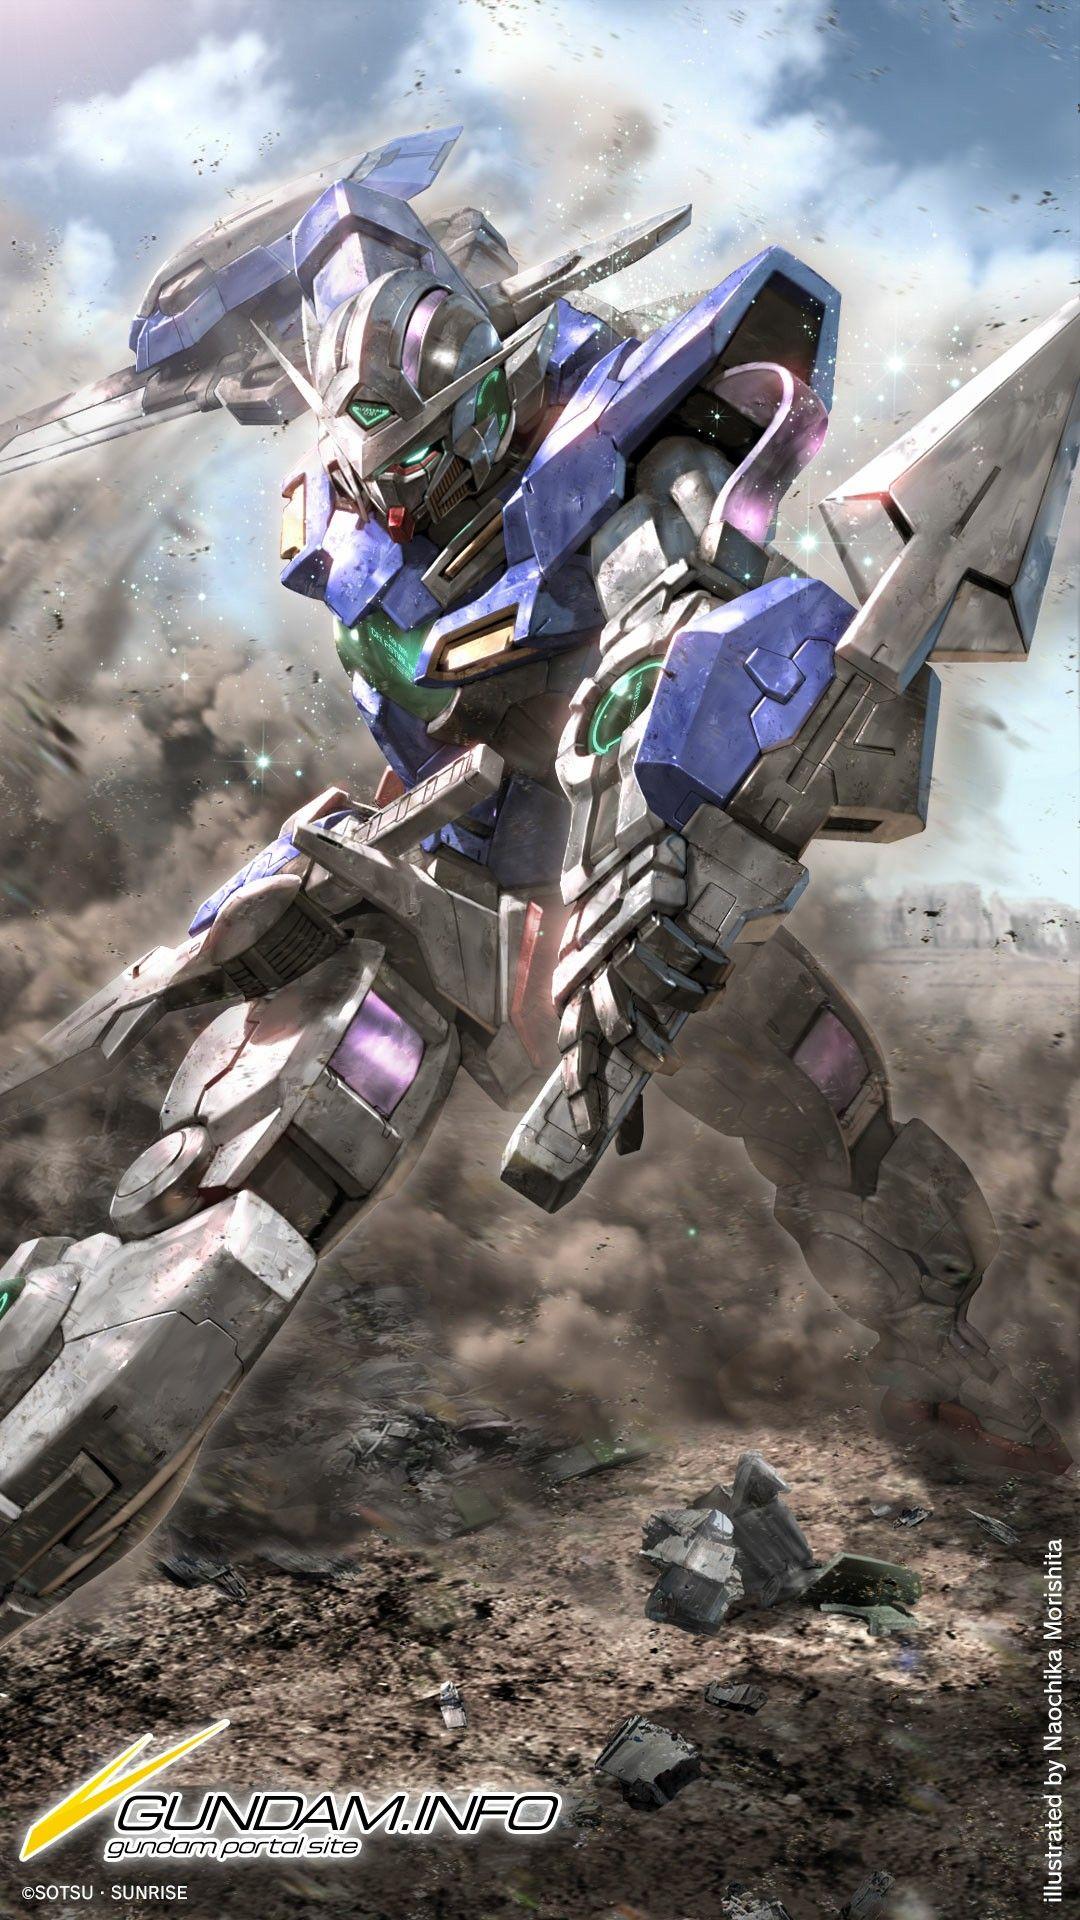 Storming Into Battle. Gundam wallpaper, Gundam exia, Gundam